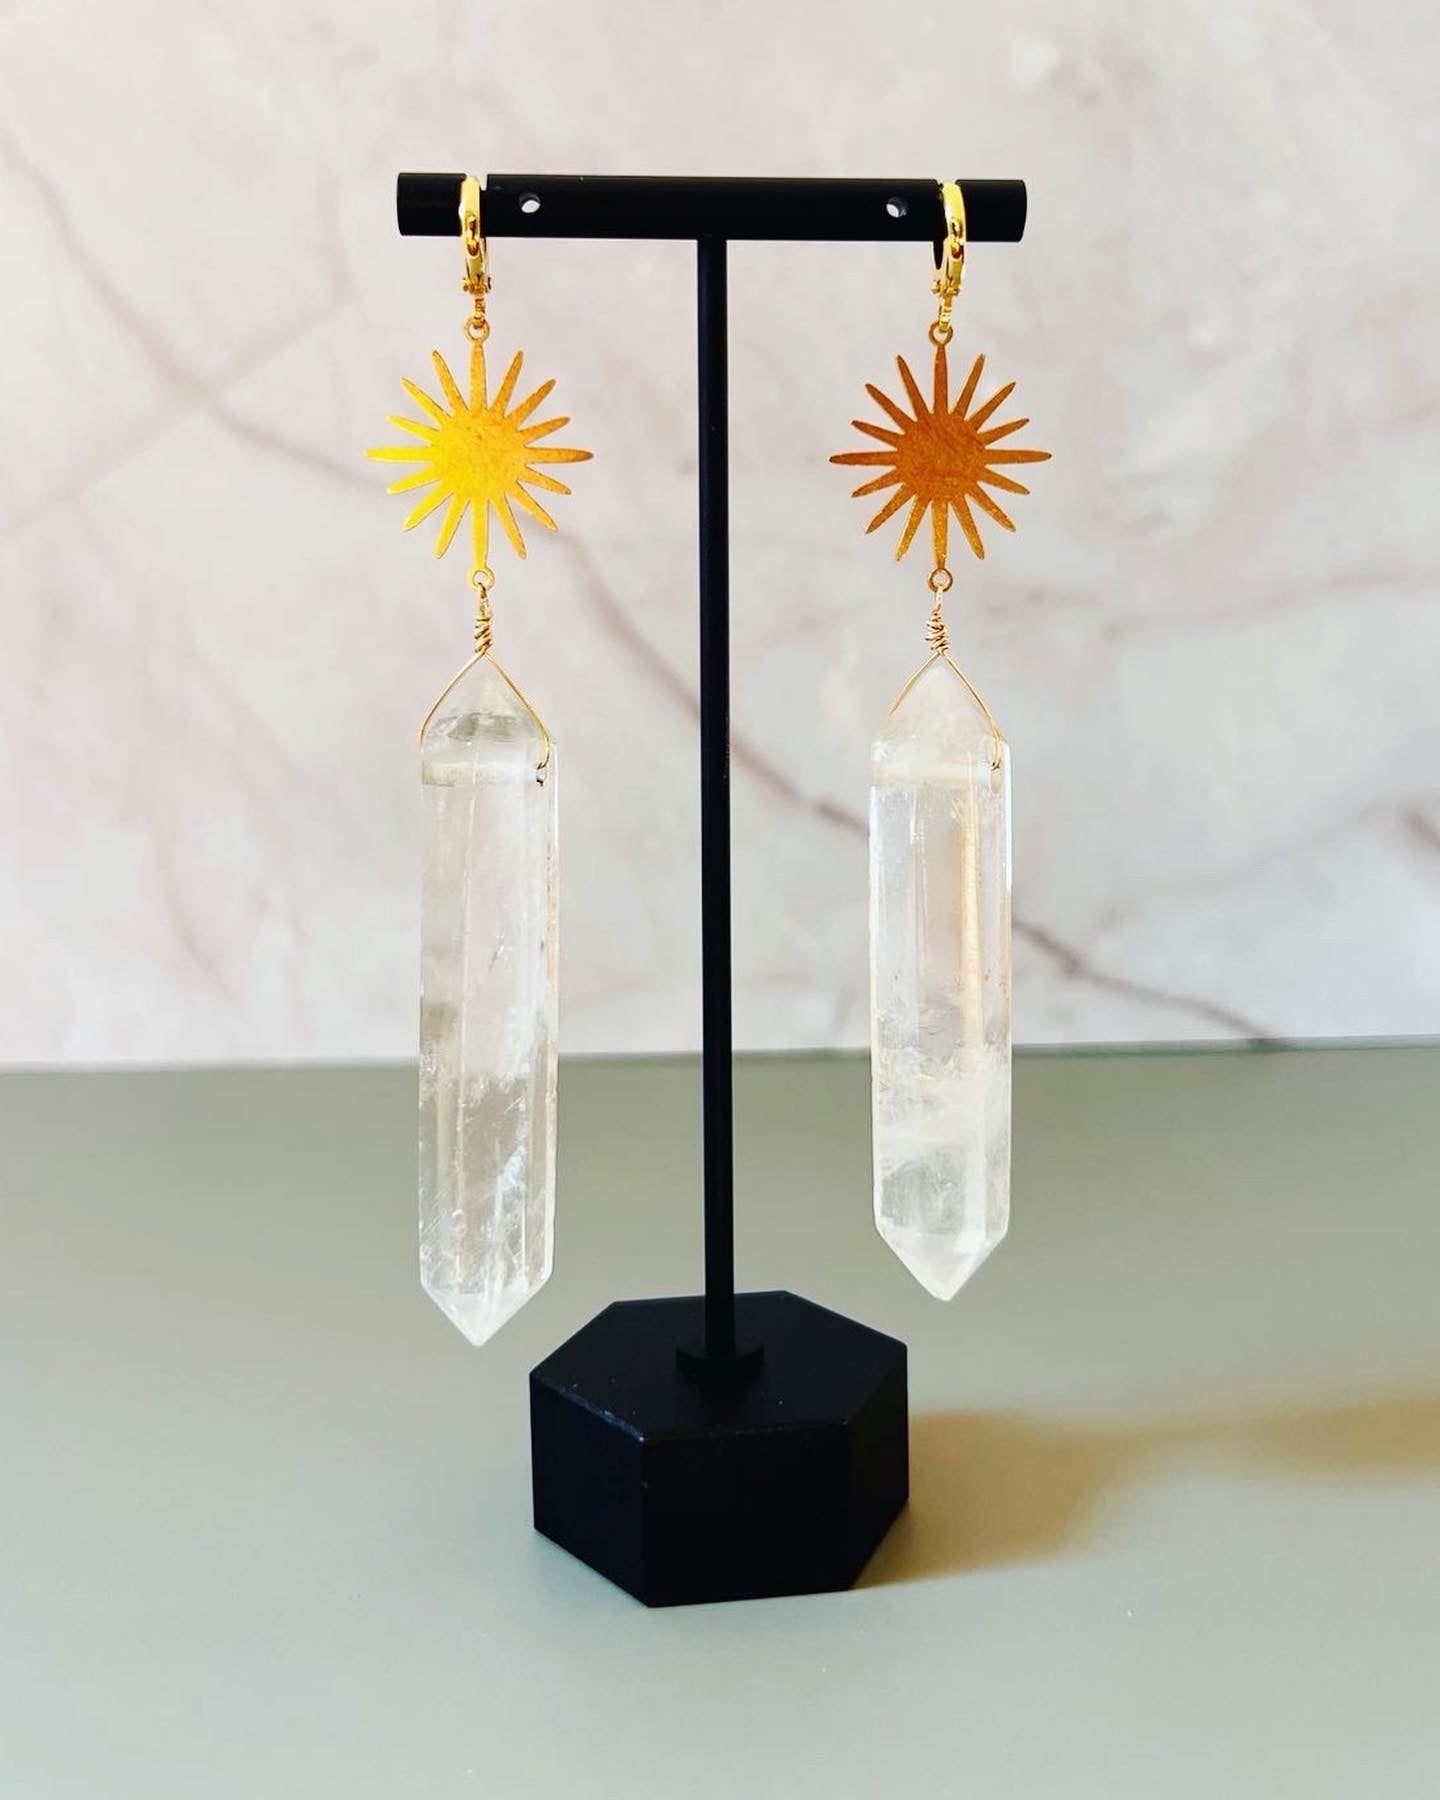 Witchy & Dreamy Crystal Quartz Golden Sunburst Earrings